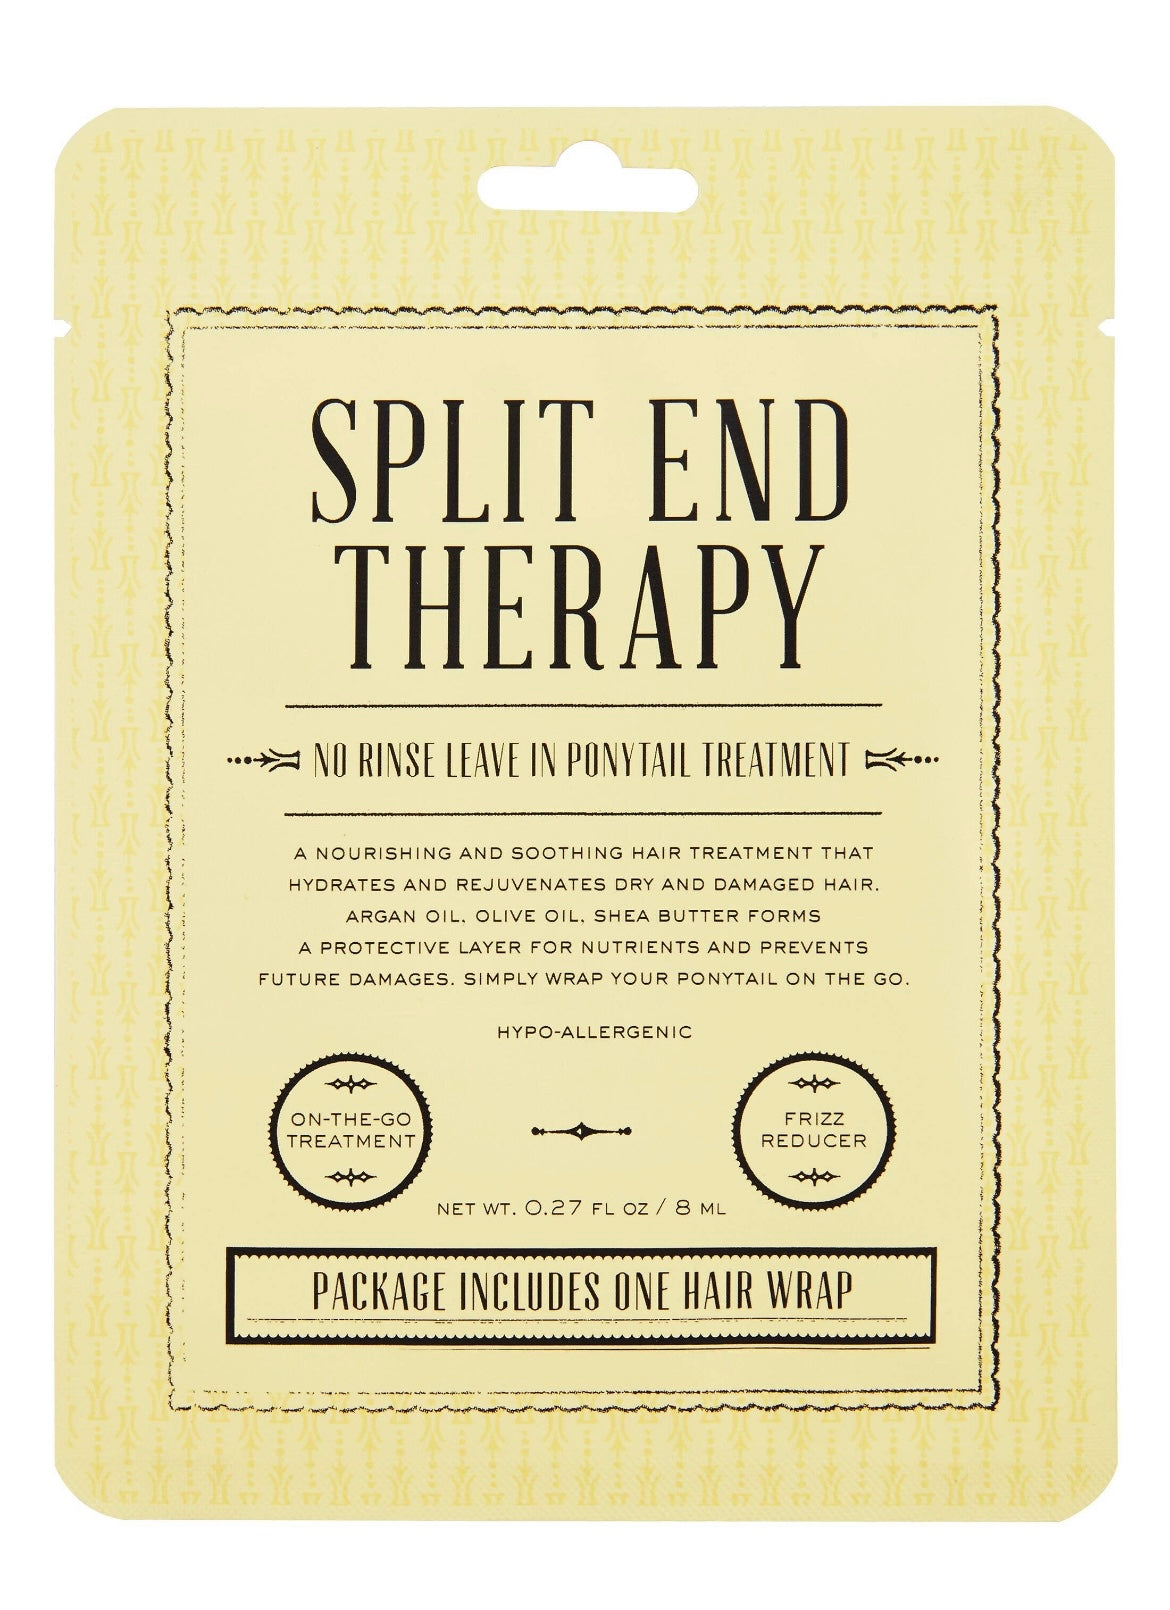 Split End Therapy